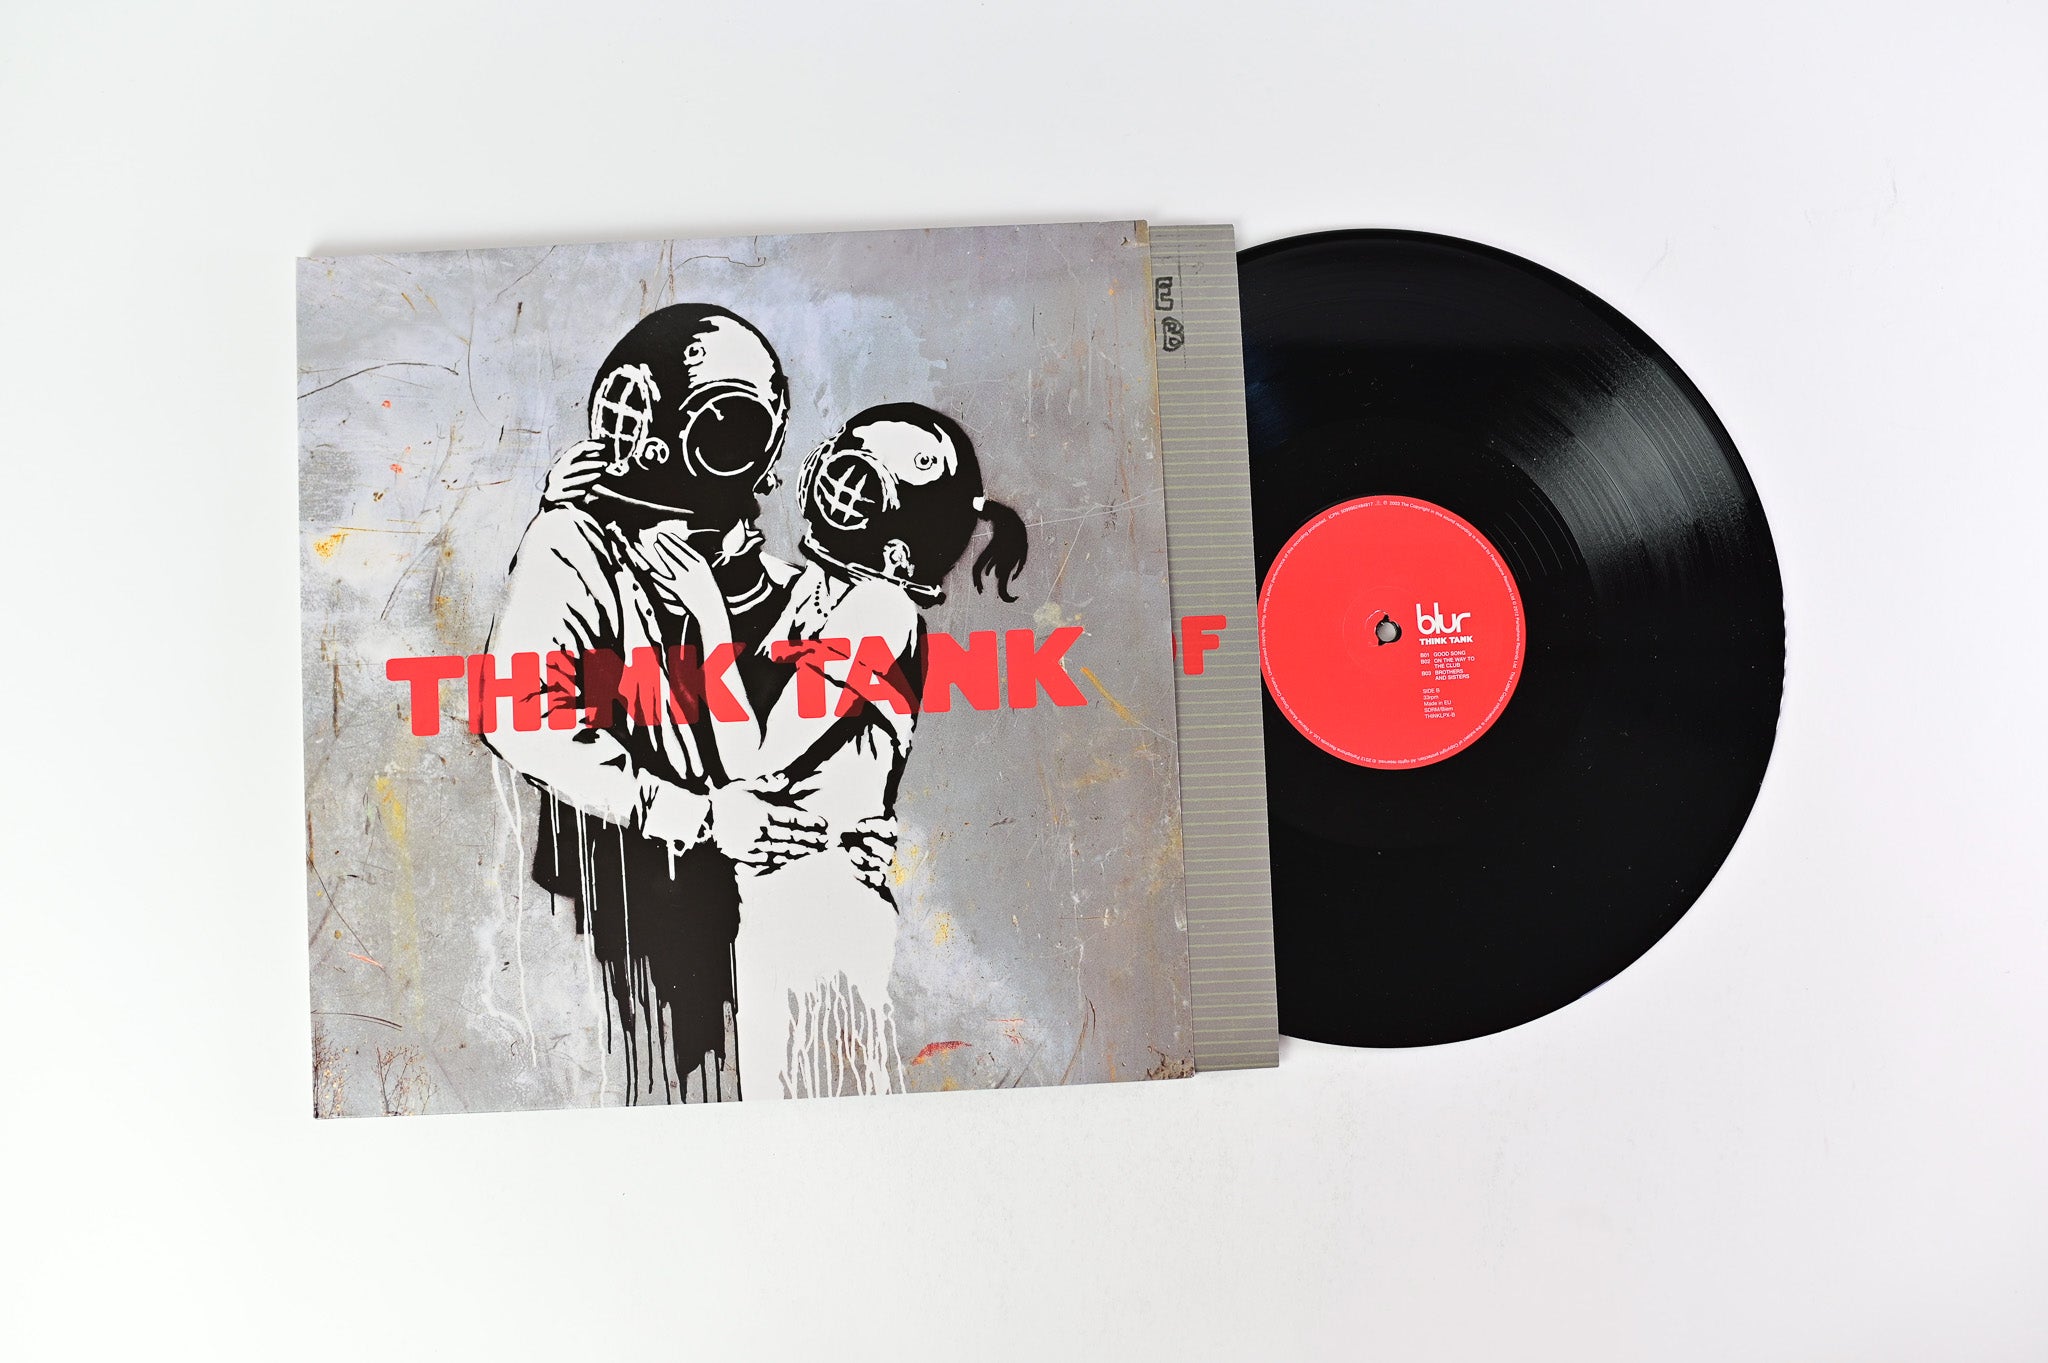 Blur - Think Tank on Parlophone Reissue